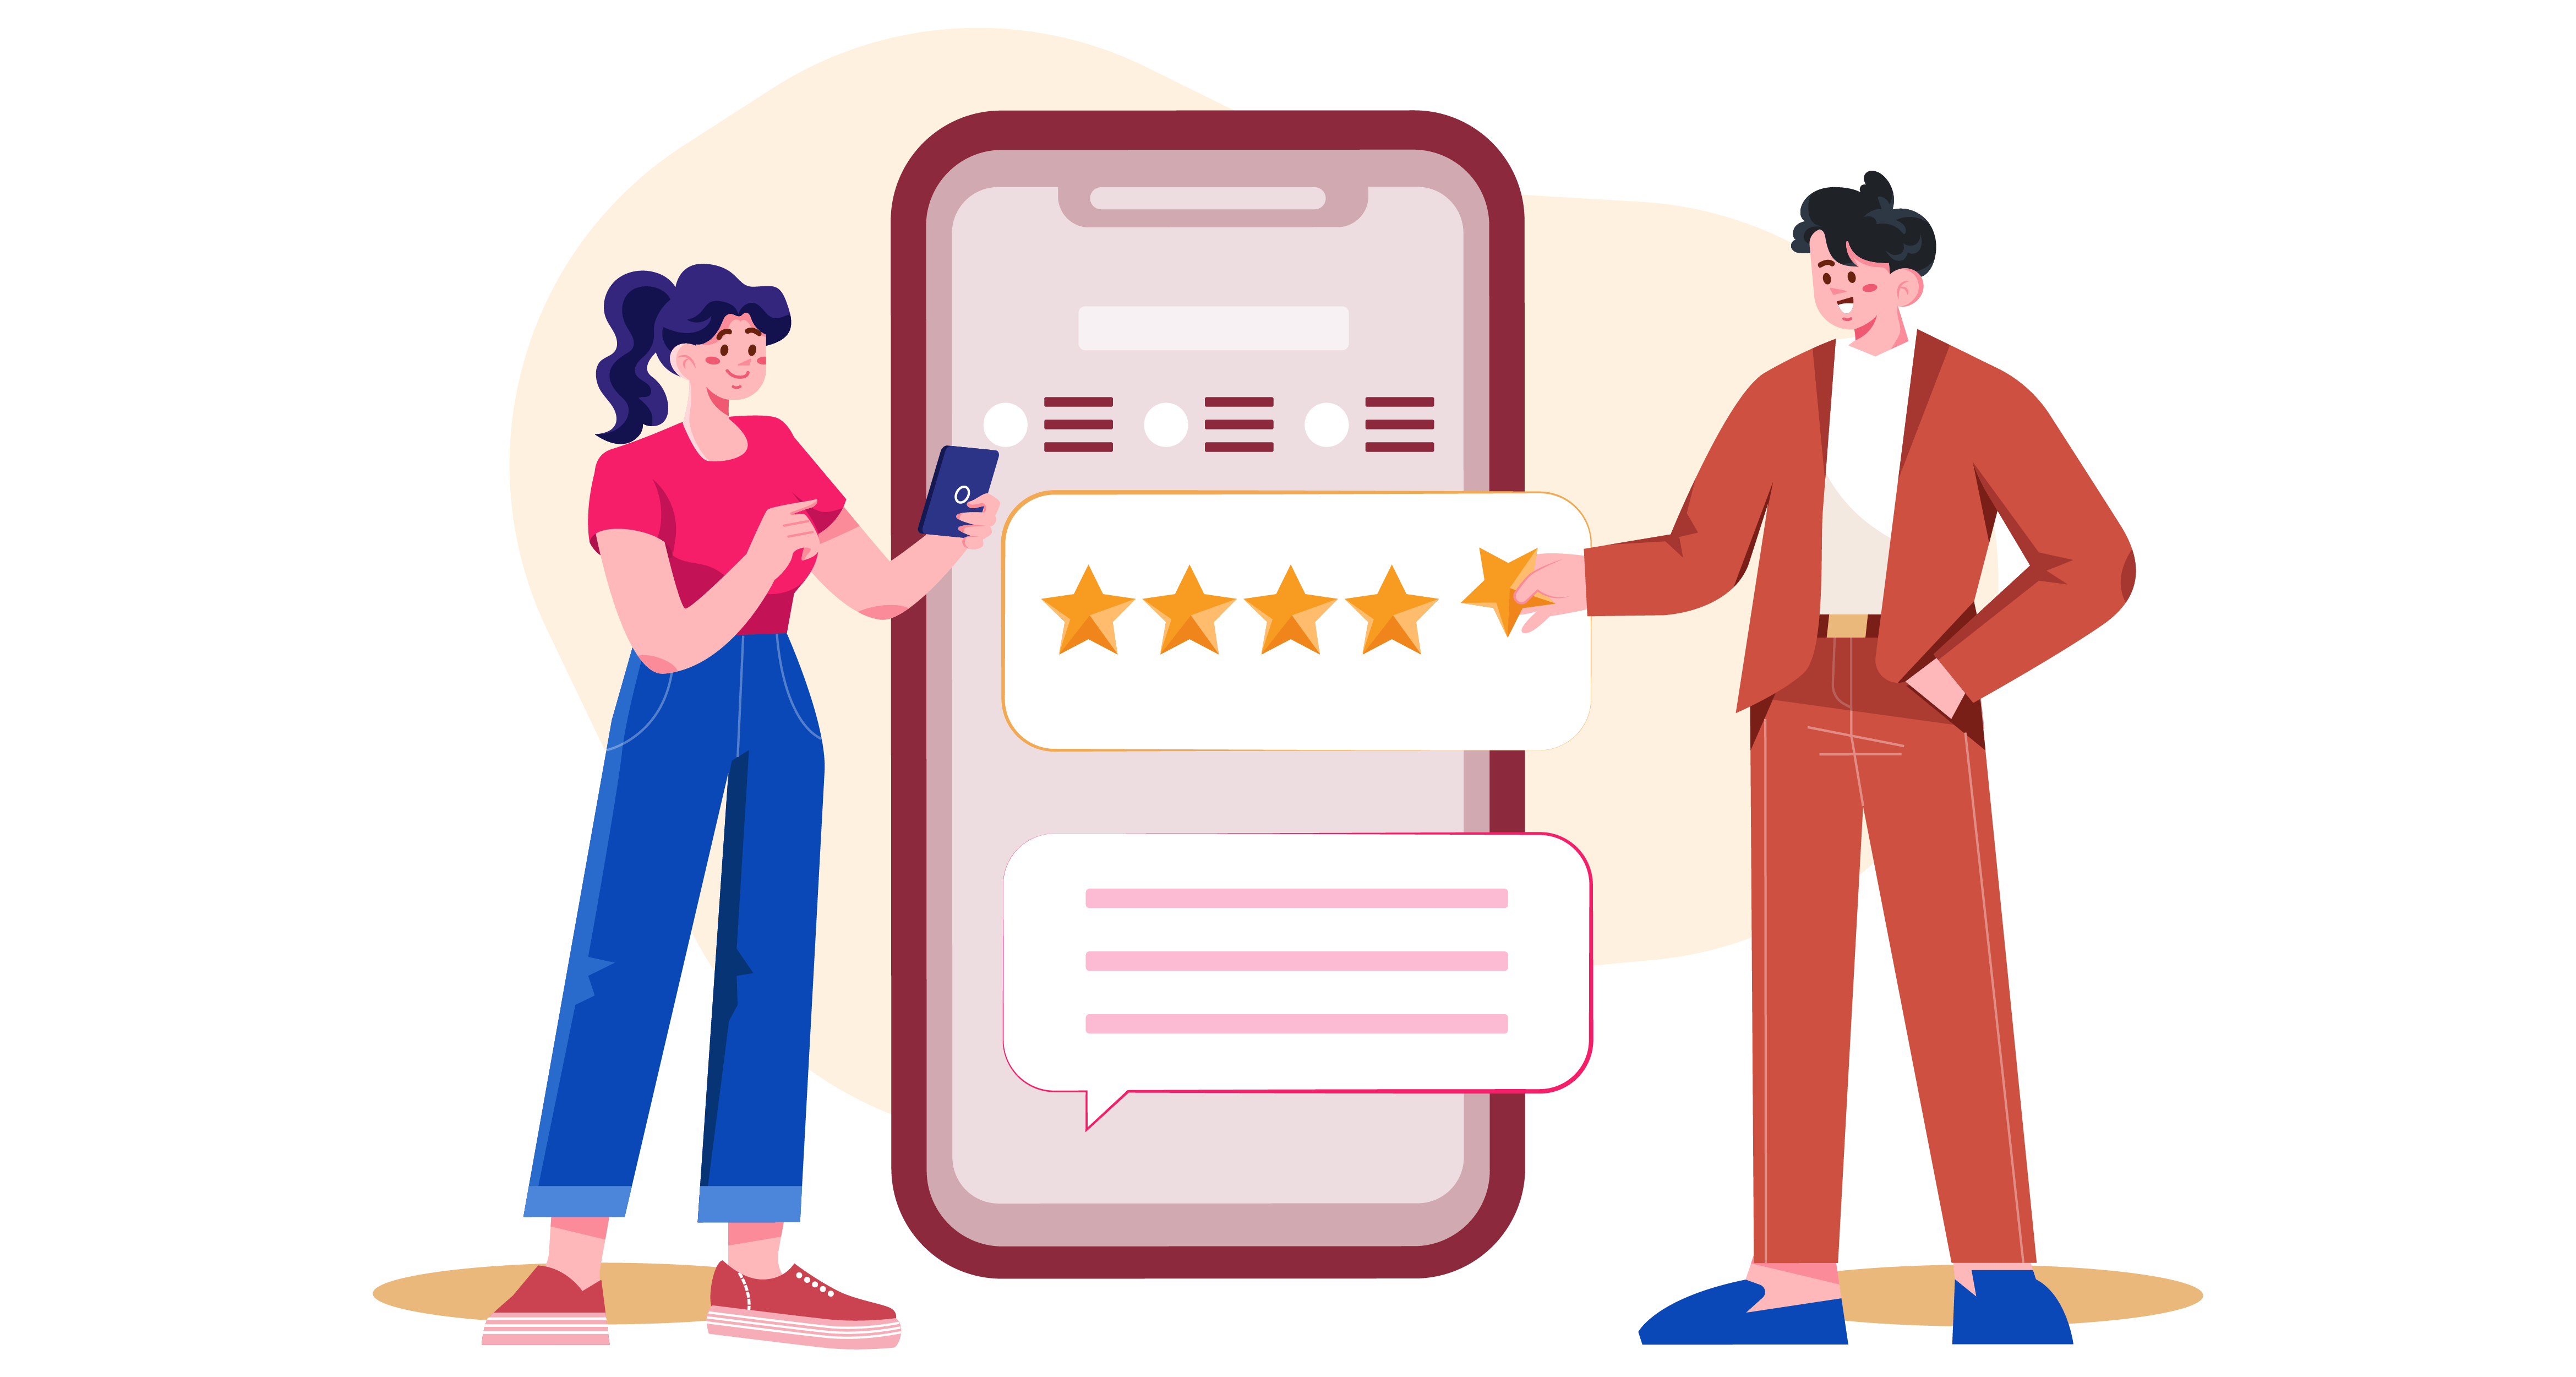 customer effort score and feedback